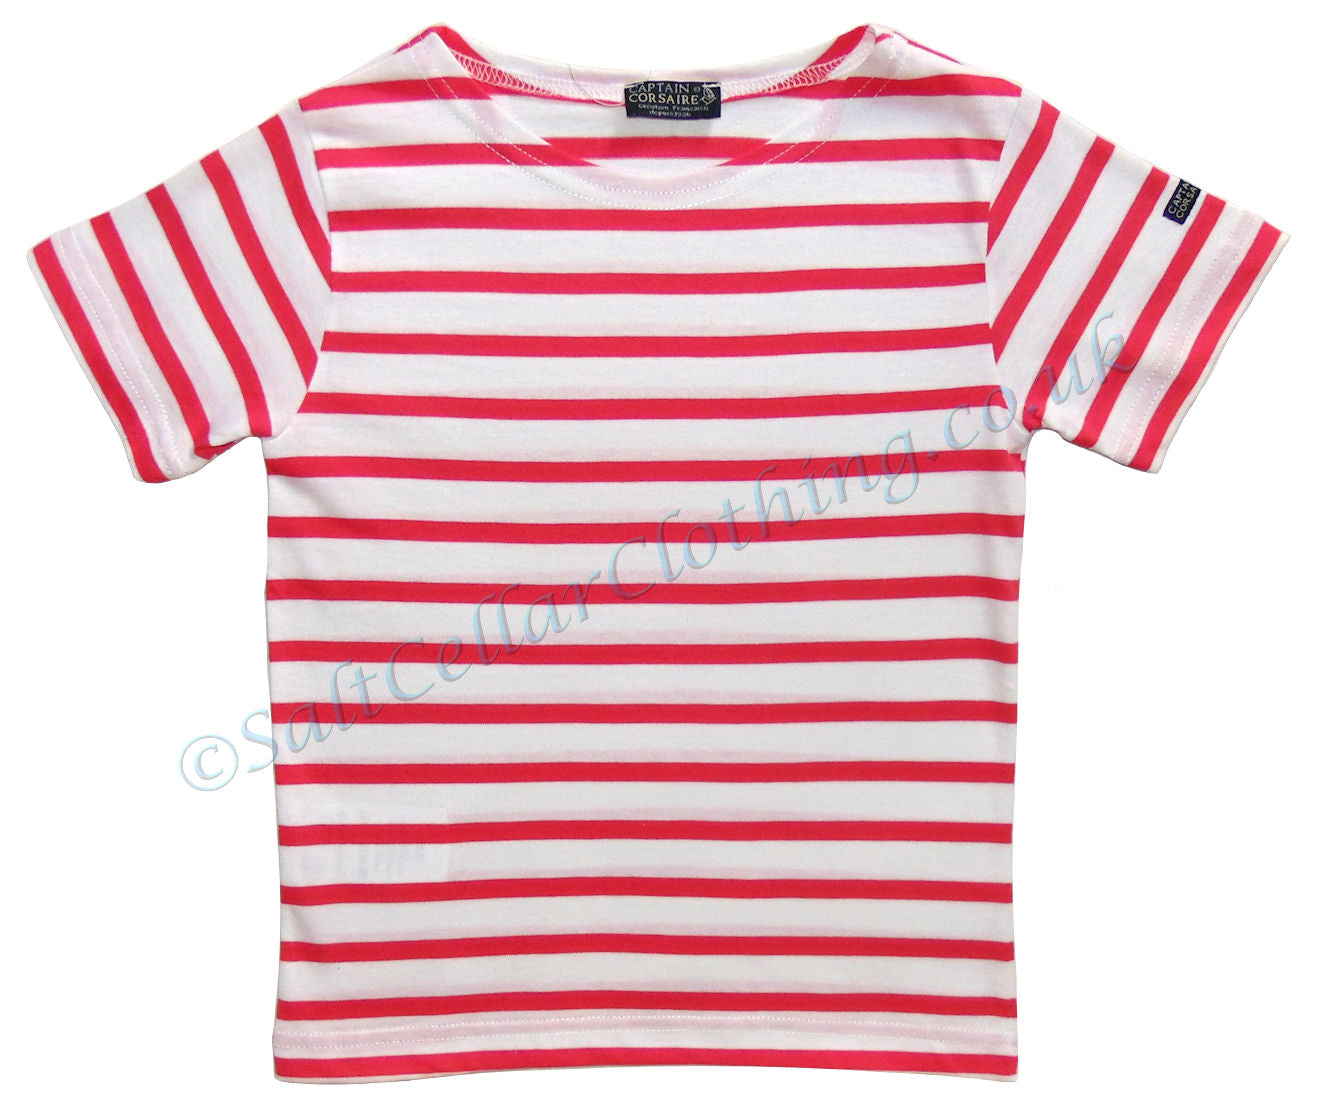 Captain Corsaire Kids 'Starboard' Stripe Tee - White / Opaline